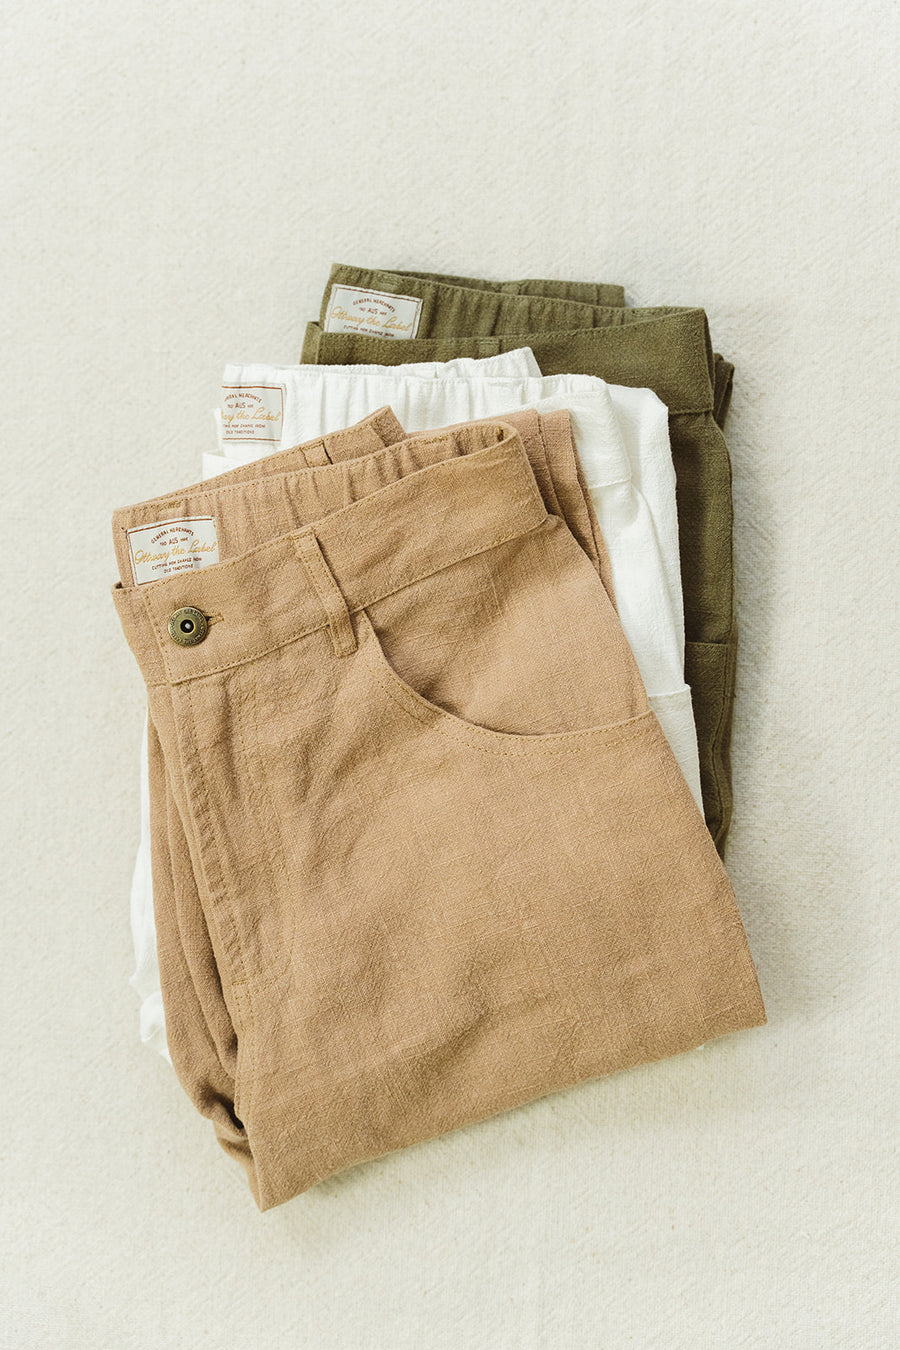 Miller - Unisex Textured Linen Pants - Khaki Green